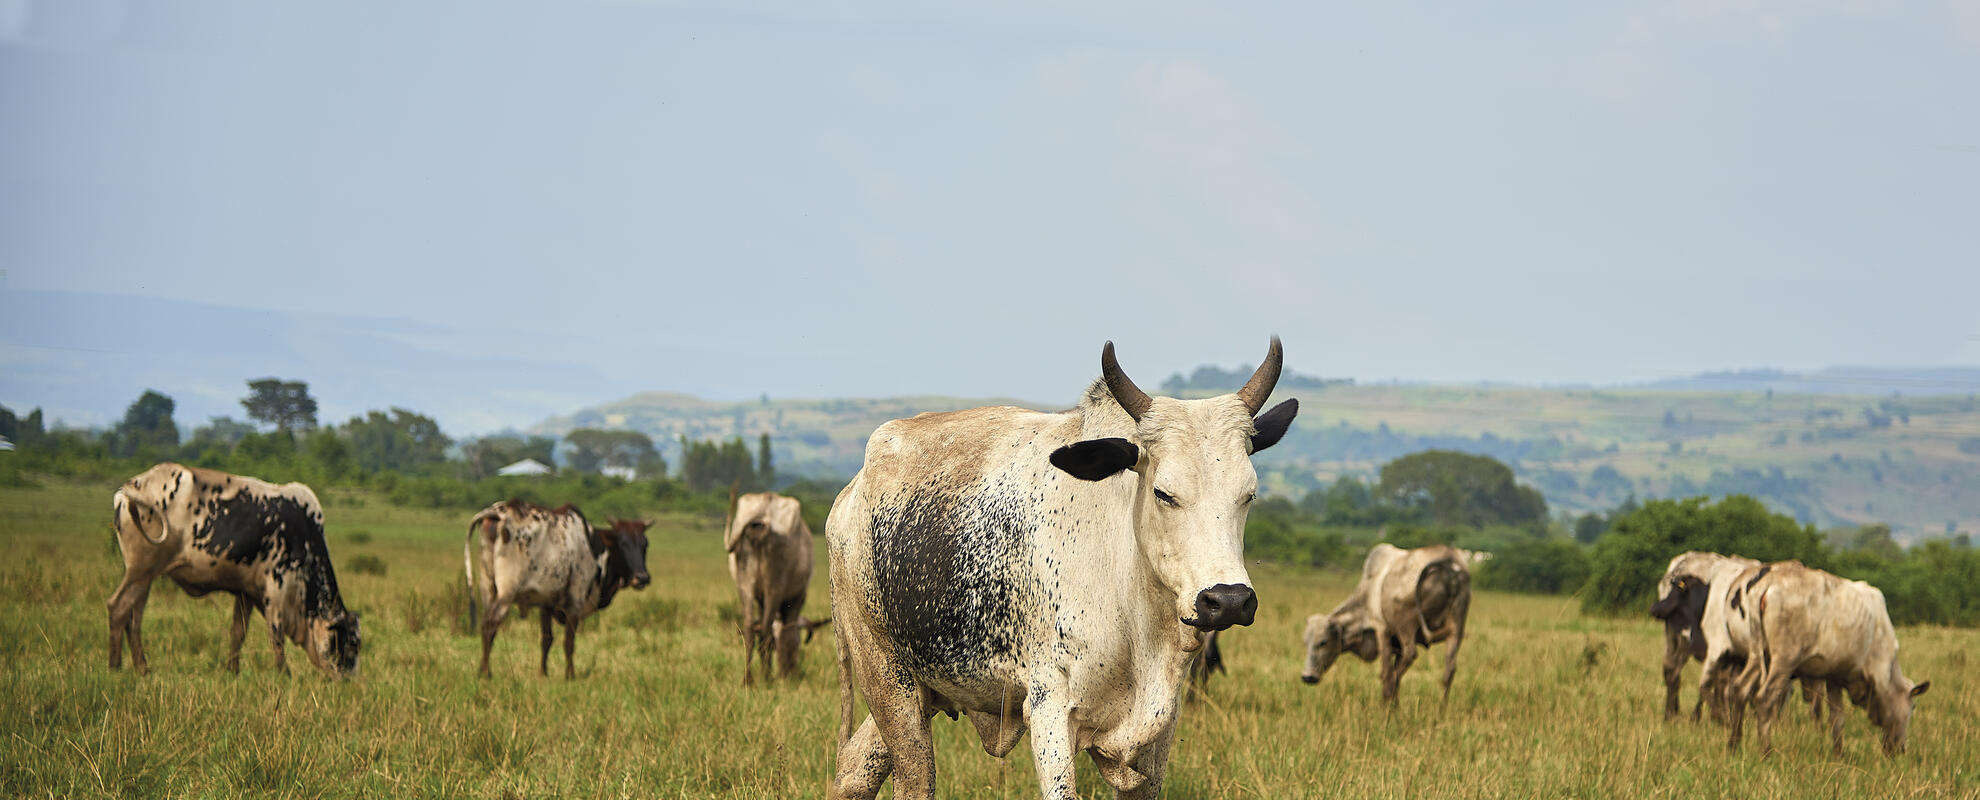 Ethiopian Fogera cattle